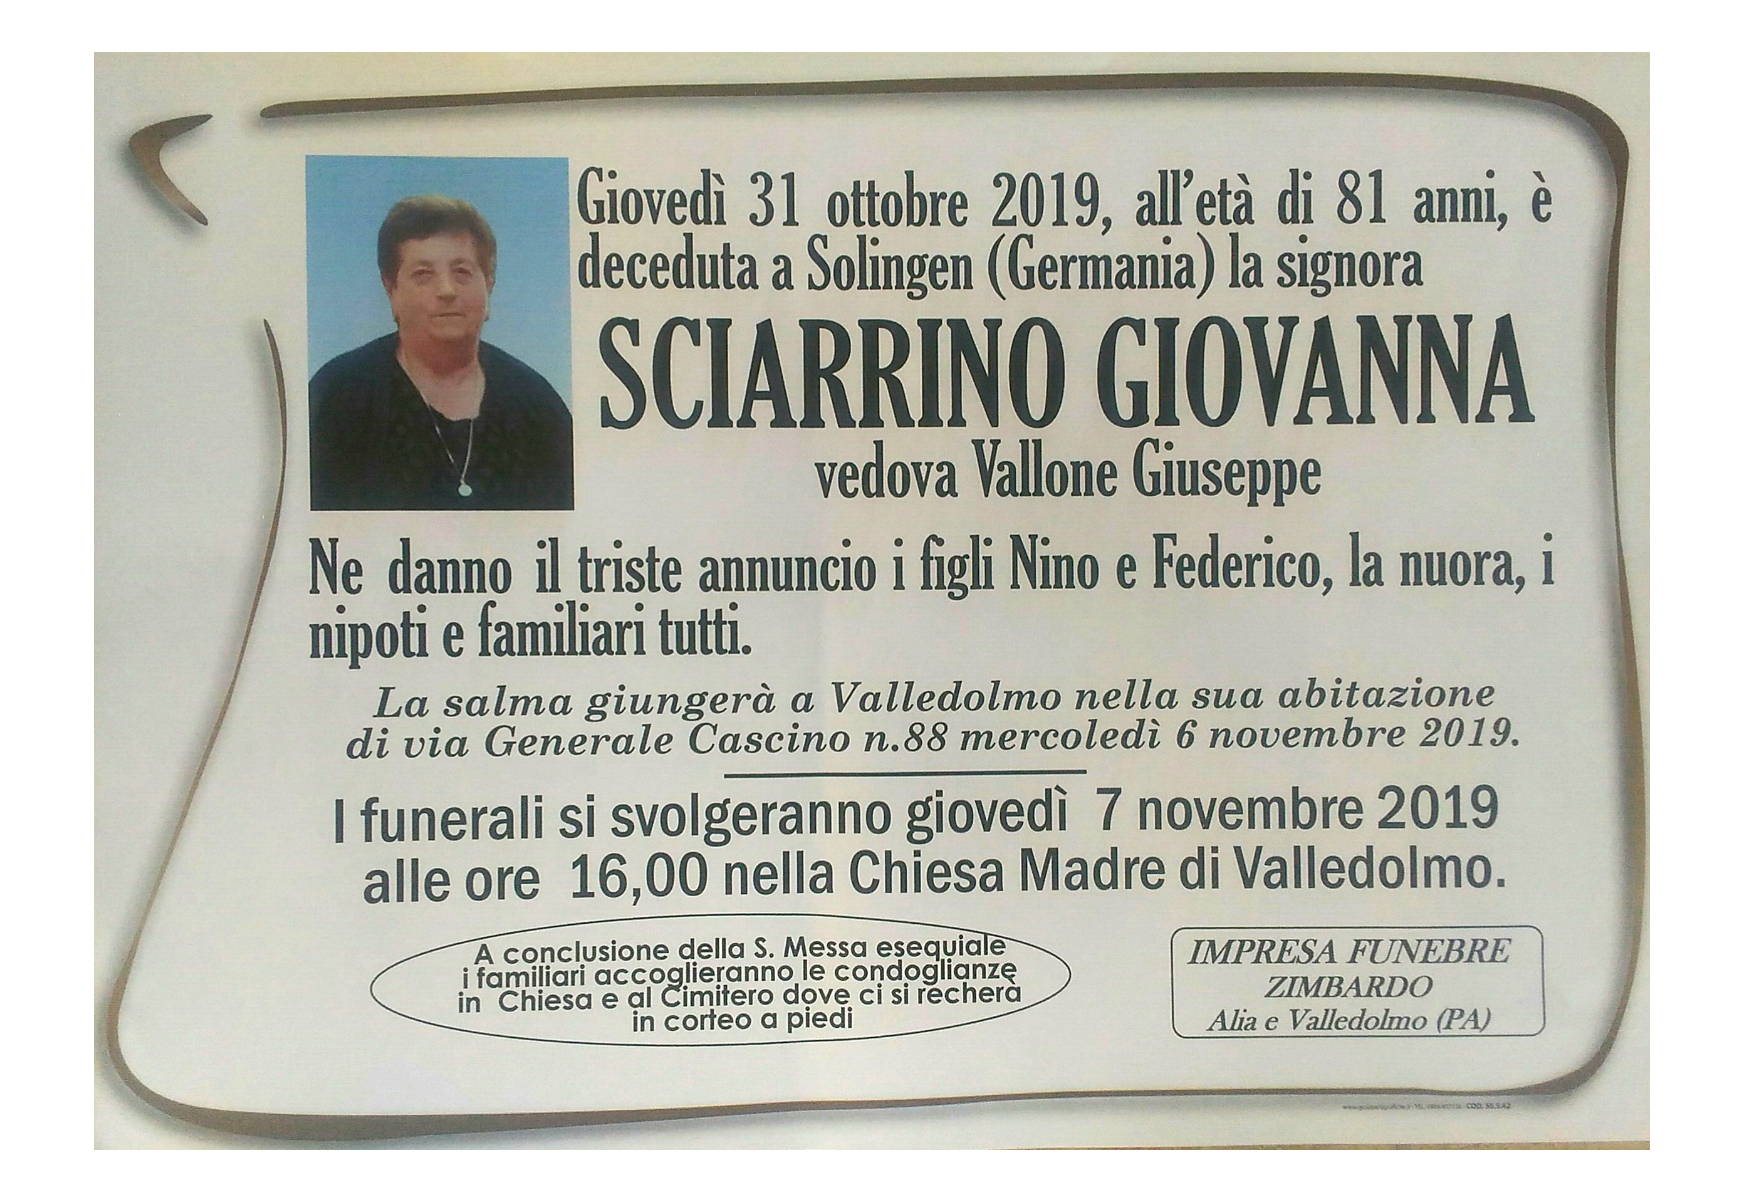 Giovanna Sciarrino